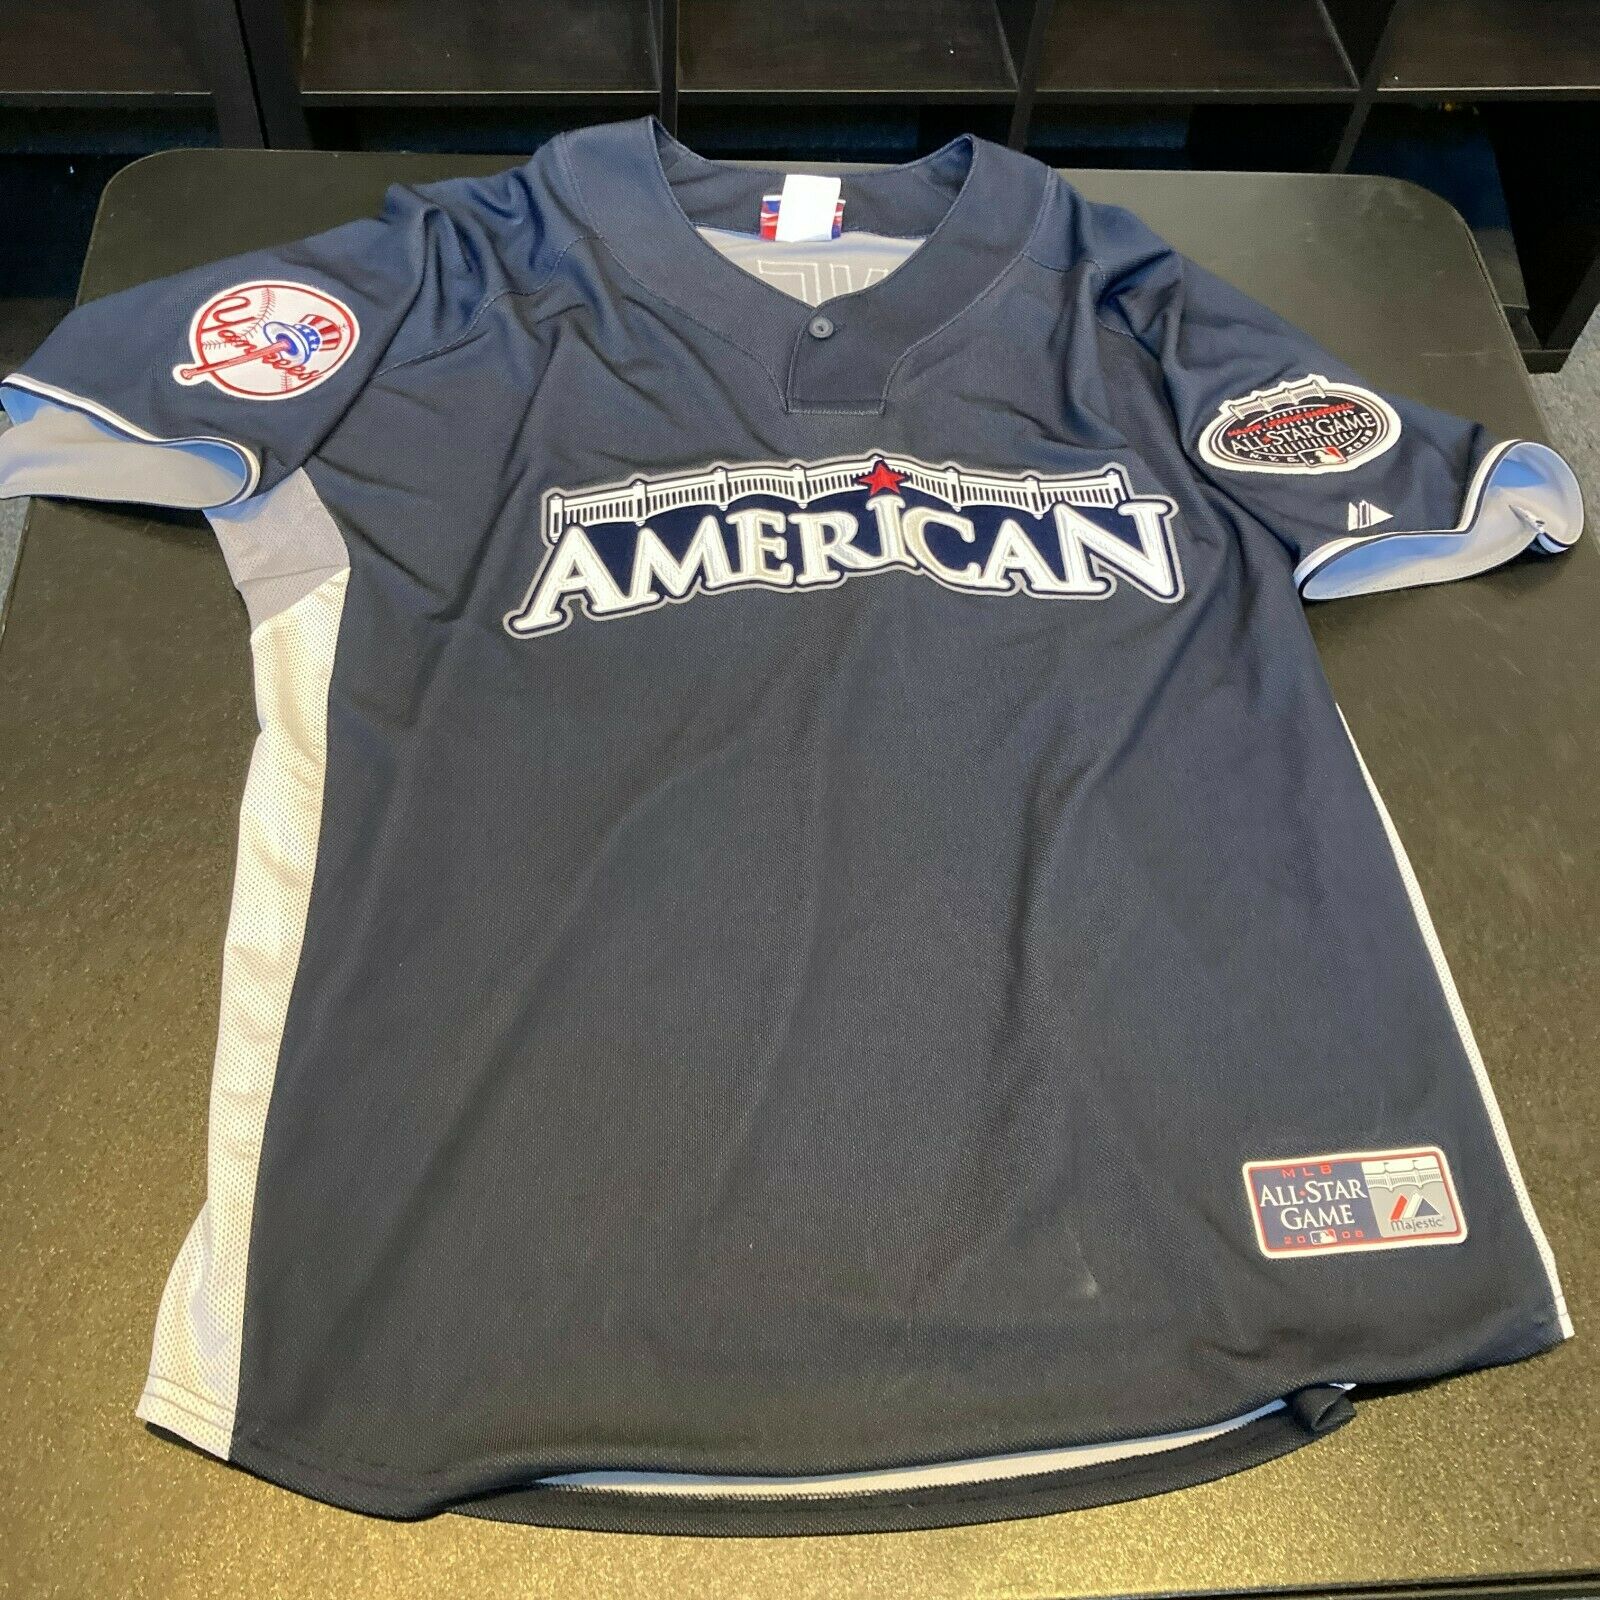 Mariano Rivera Signed Authentic 2008 Yankee Stadium All Star Game